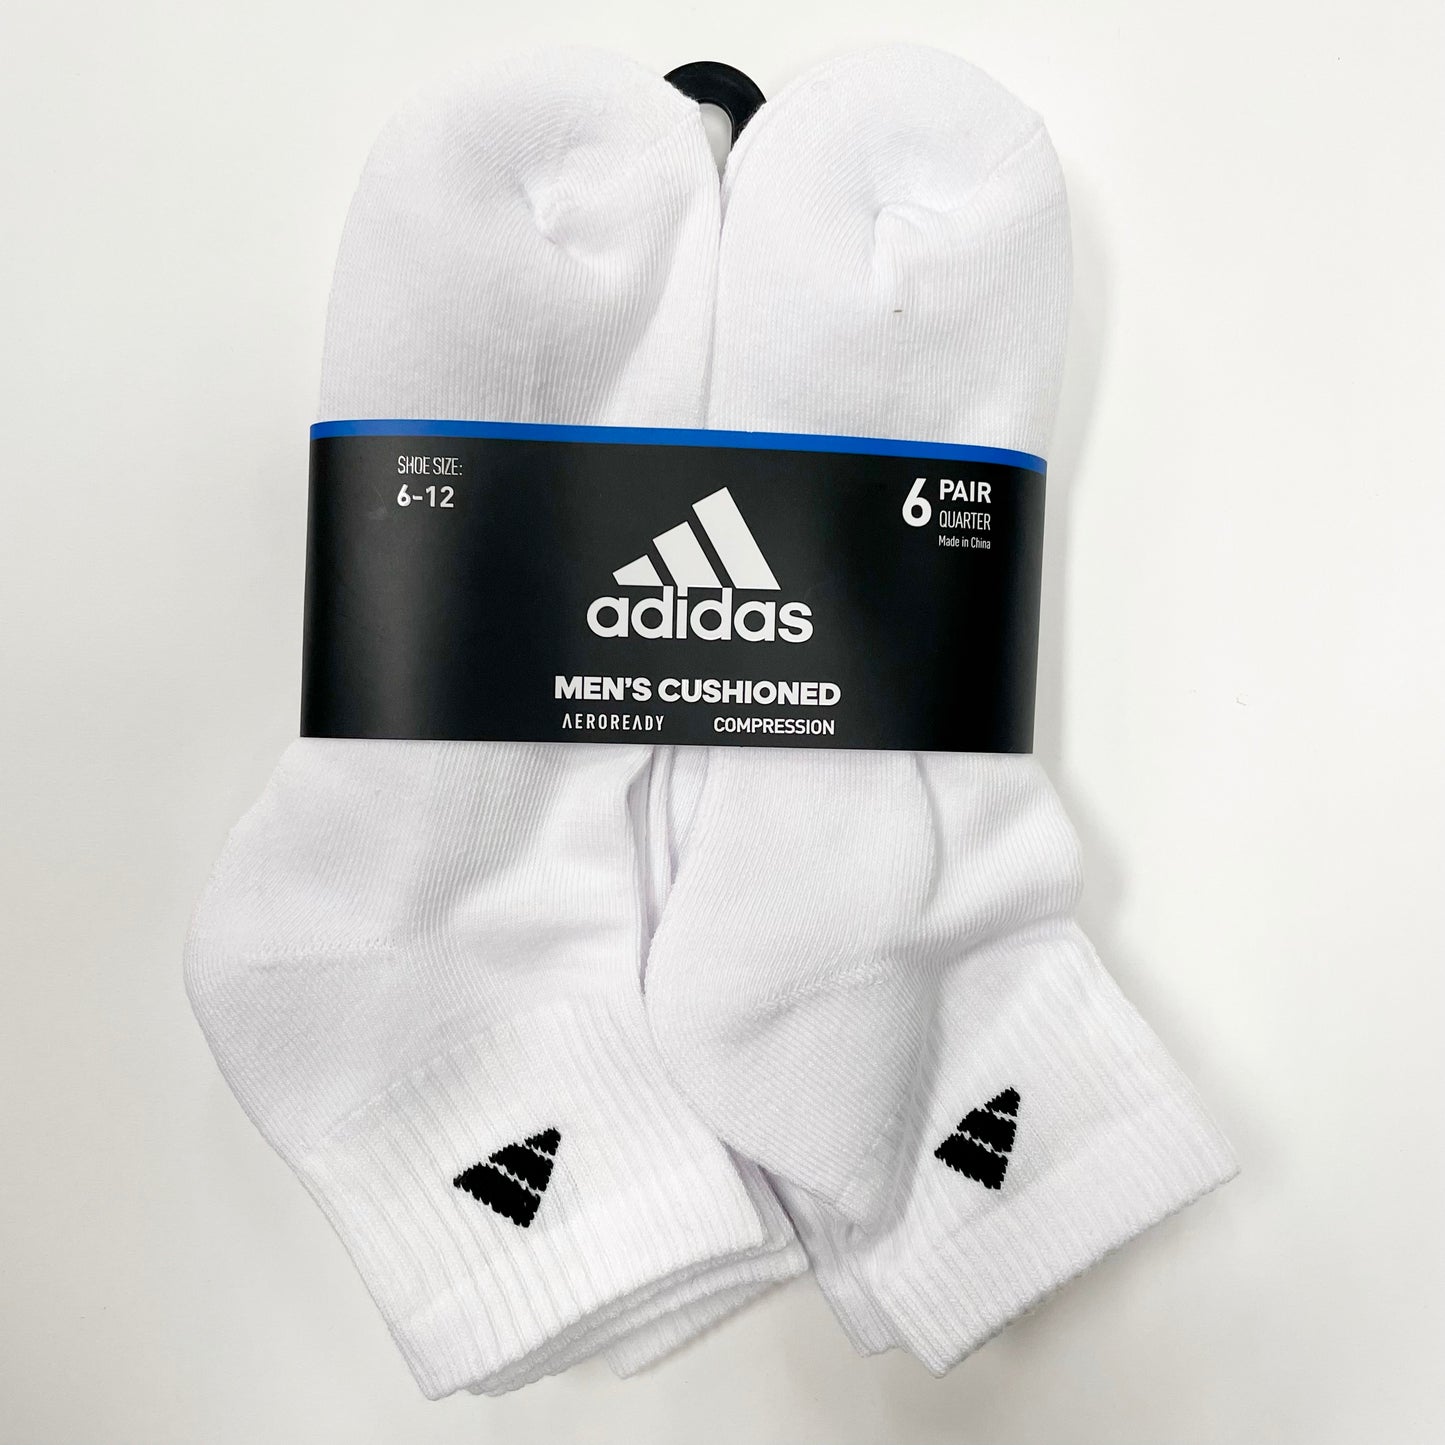 Adidas Men's Cushioned quarter-cut 6 pairs socks